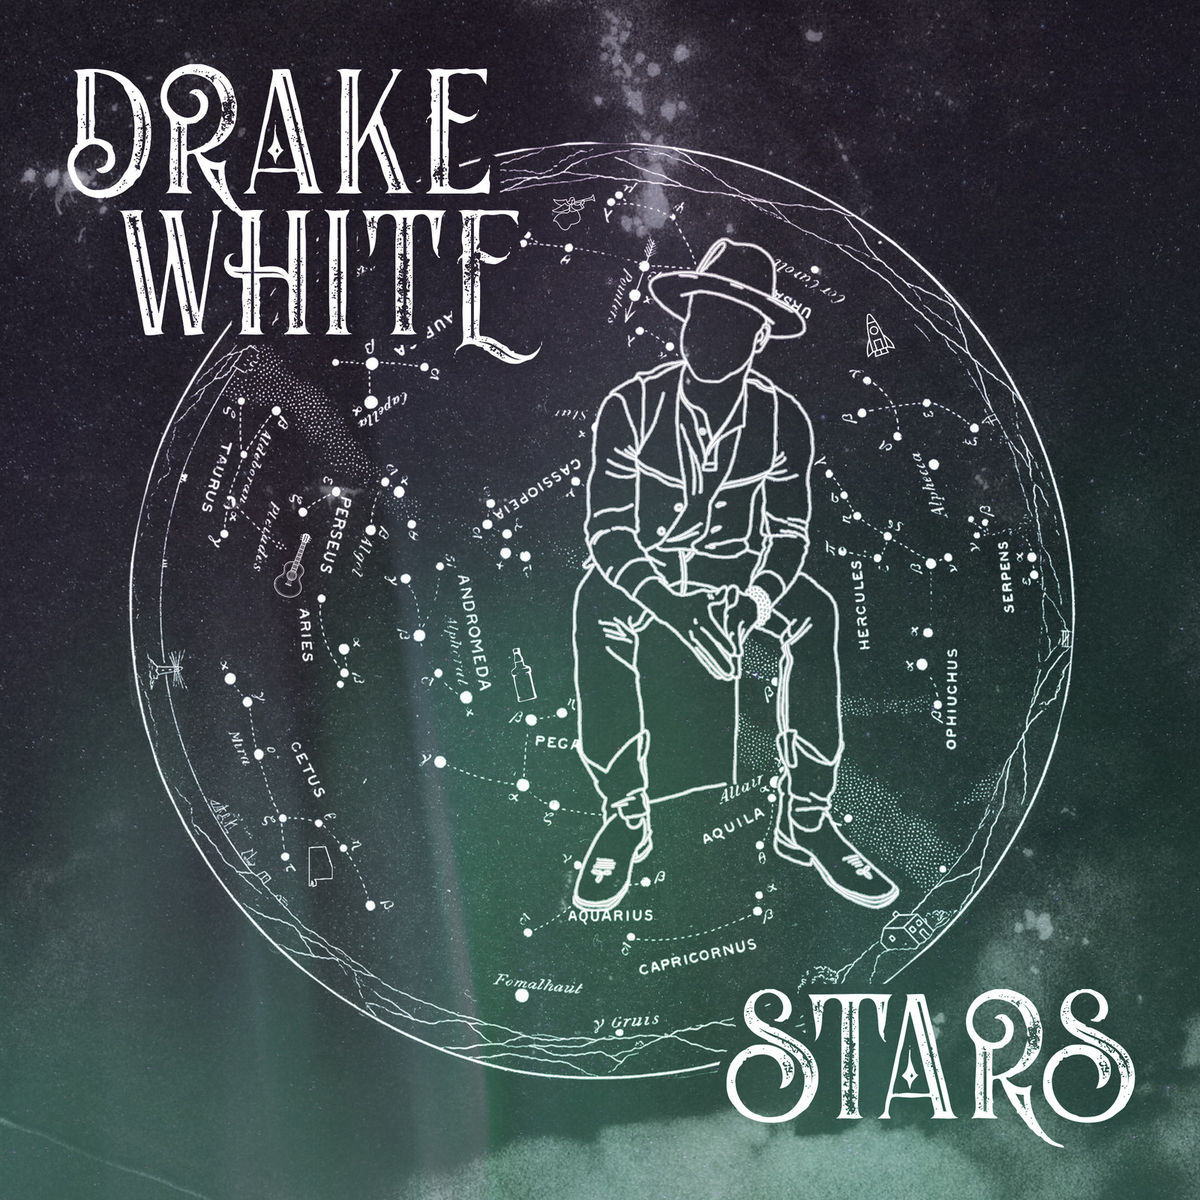 Drake White - Mix 'Em With Whiskey